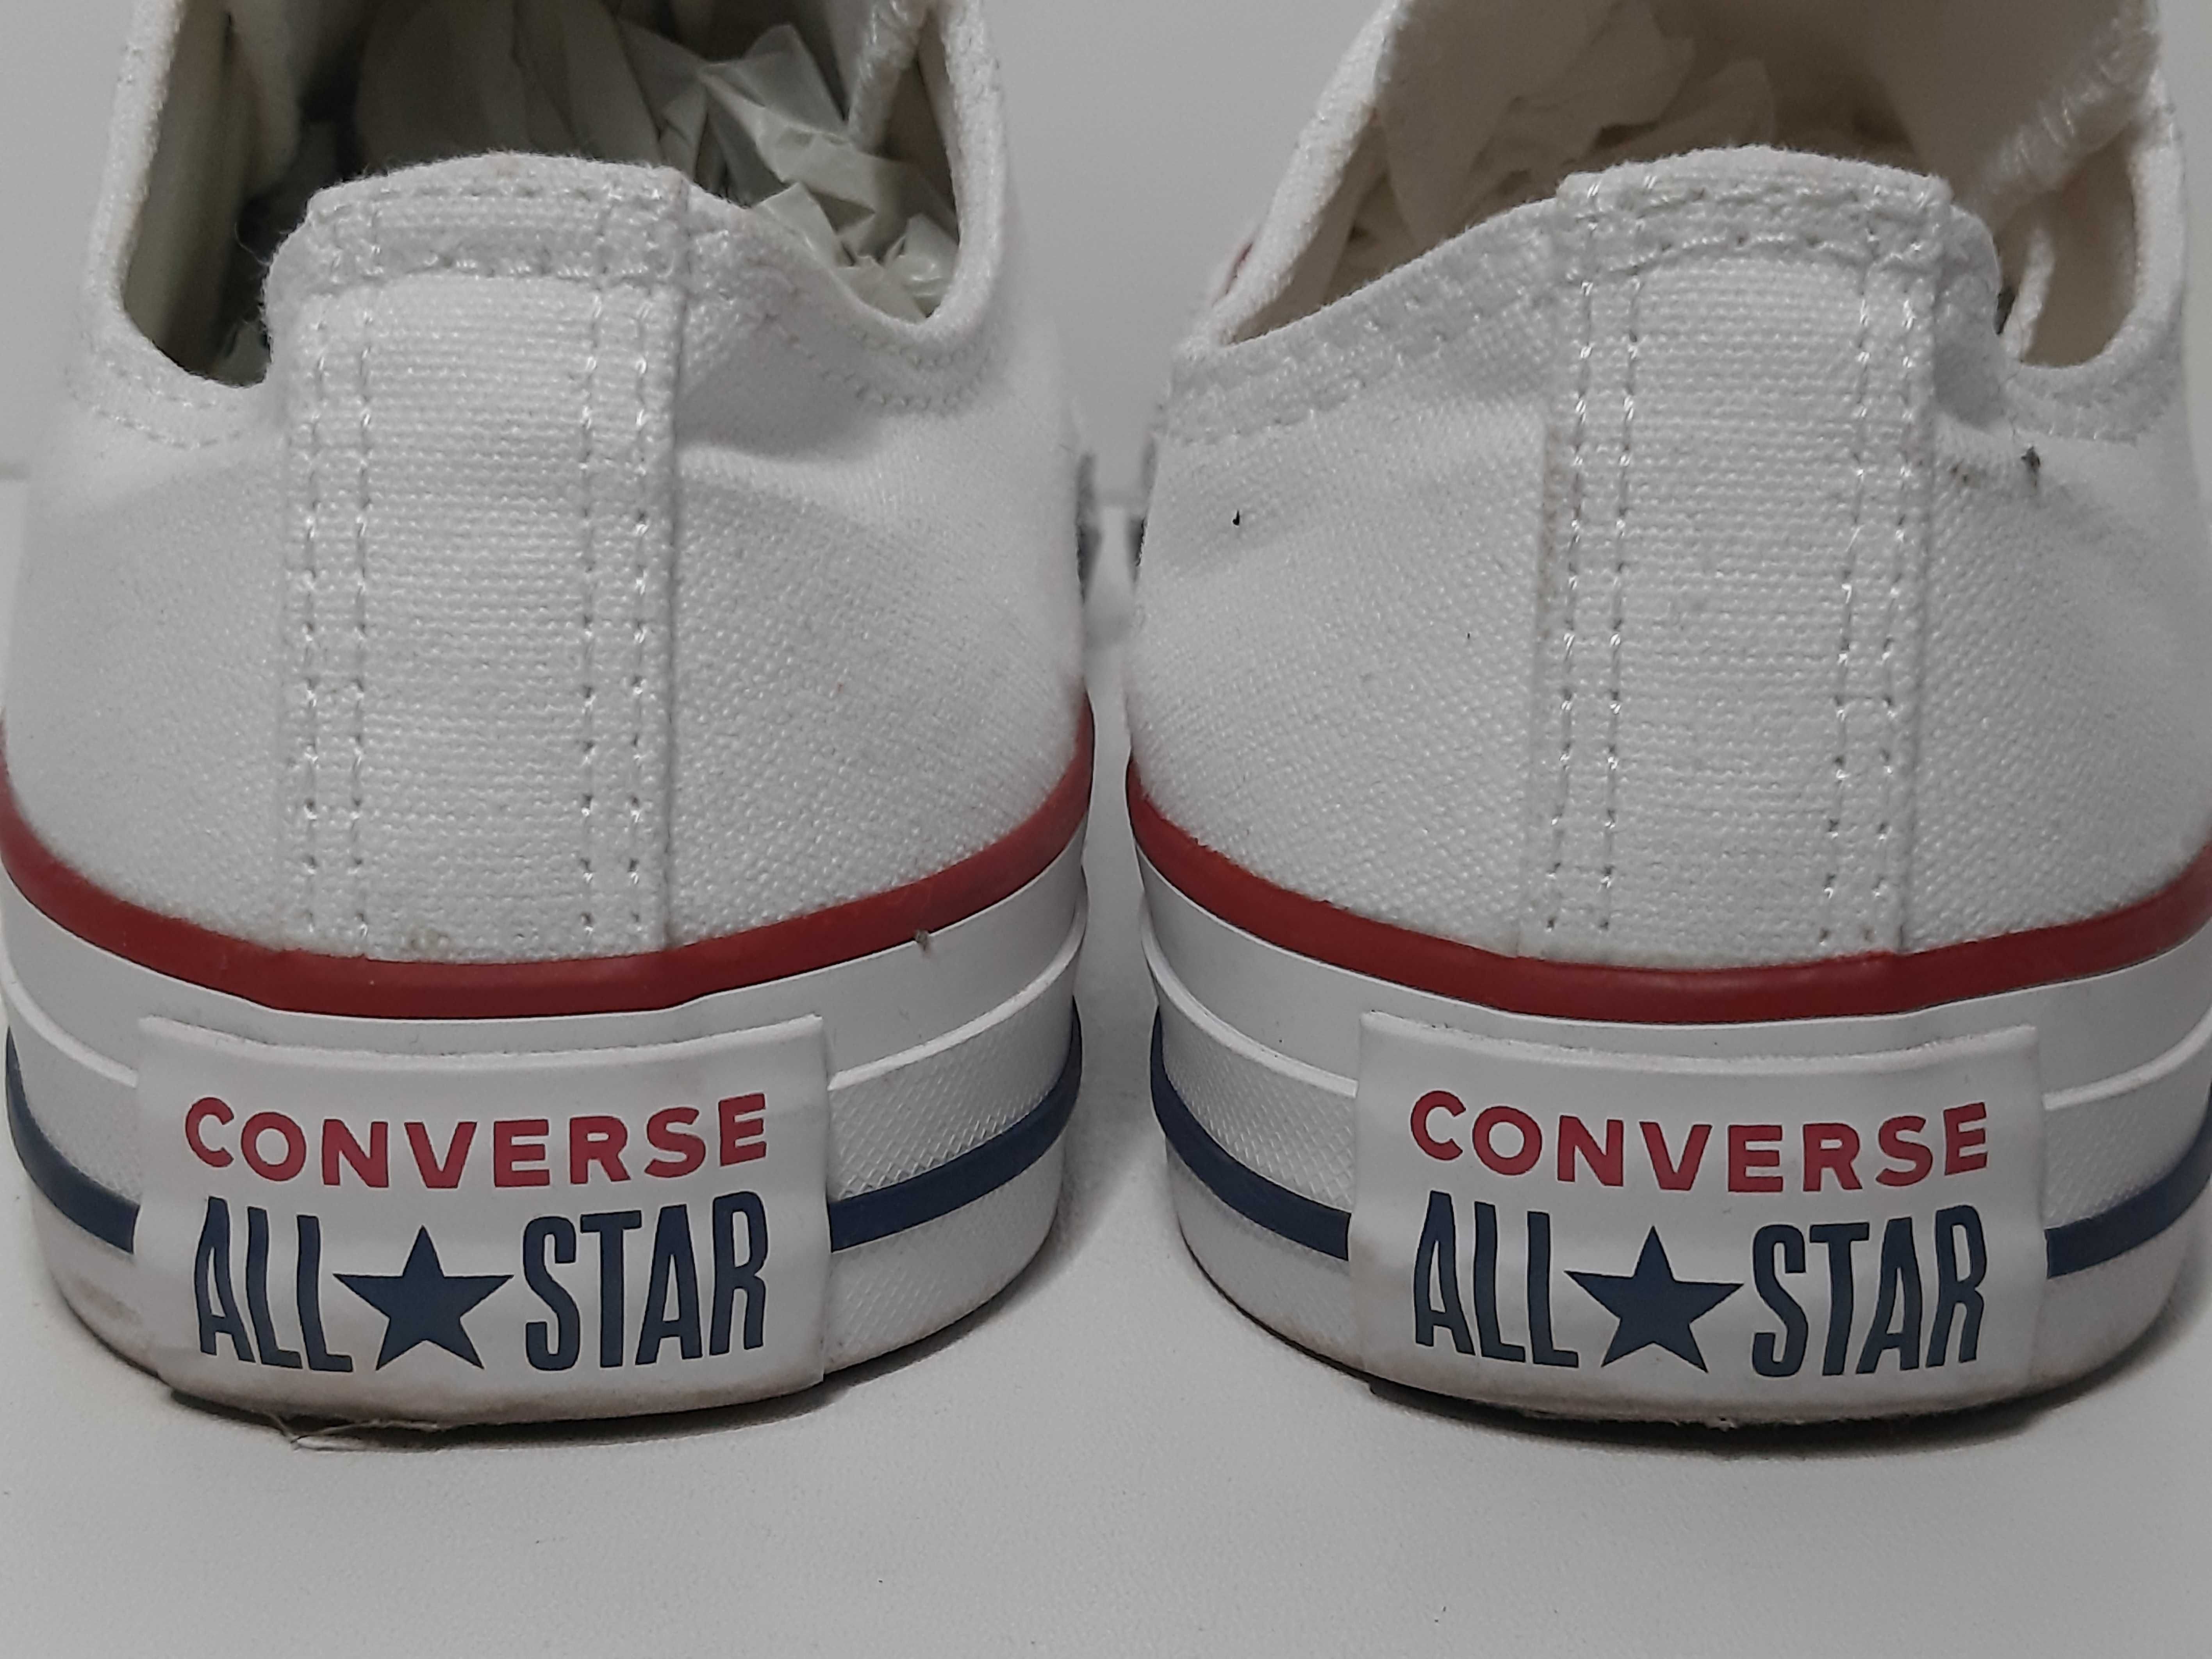 Converse All Star buty damskie r.36,5